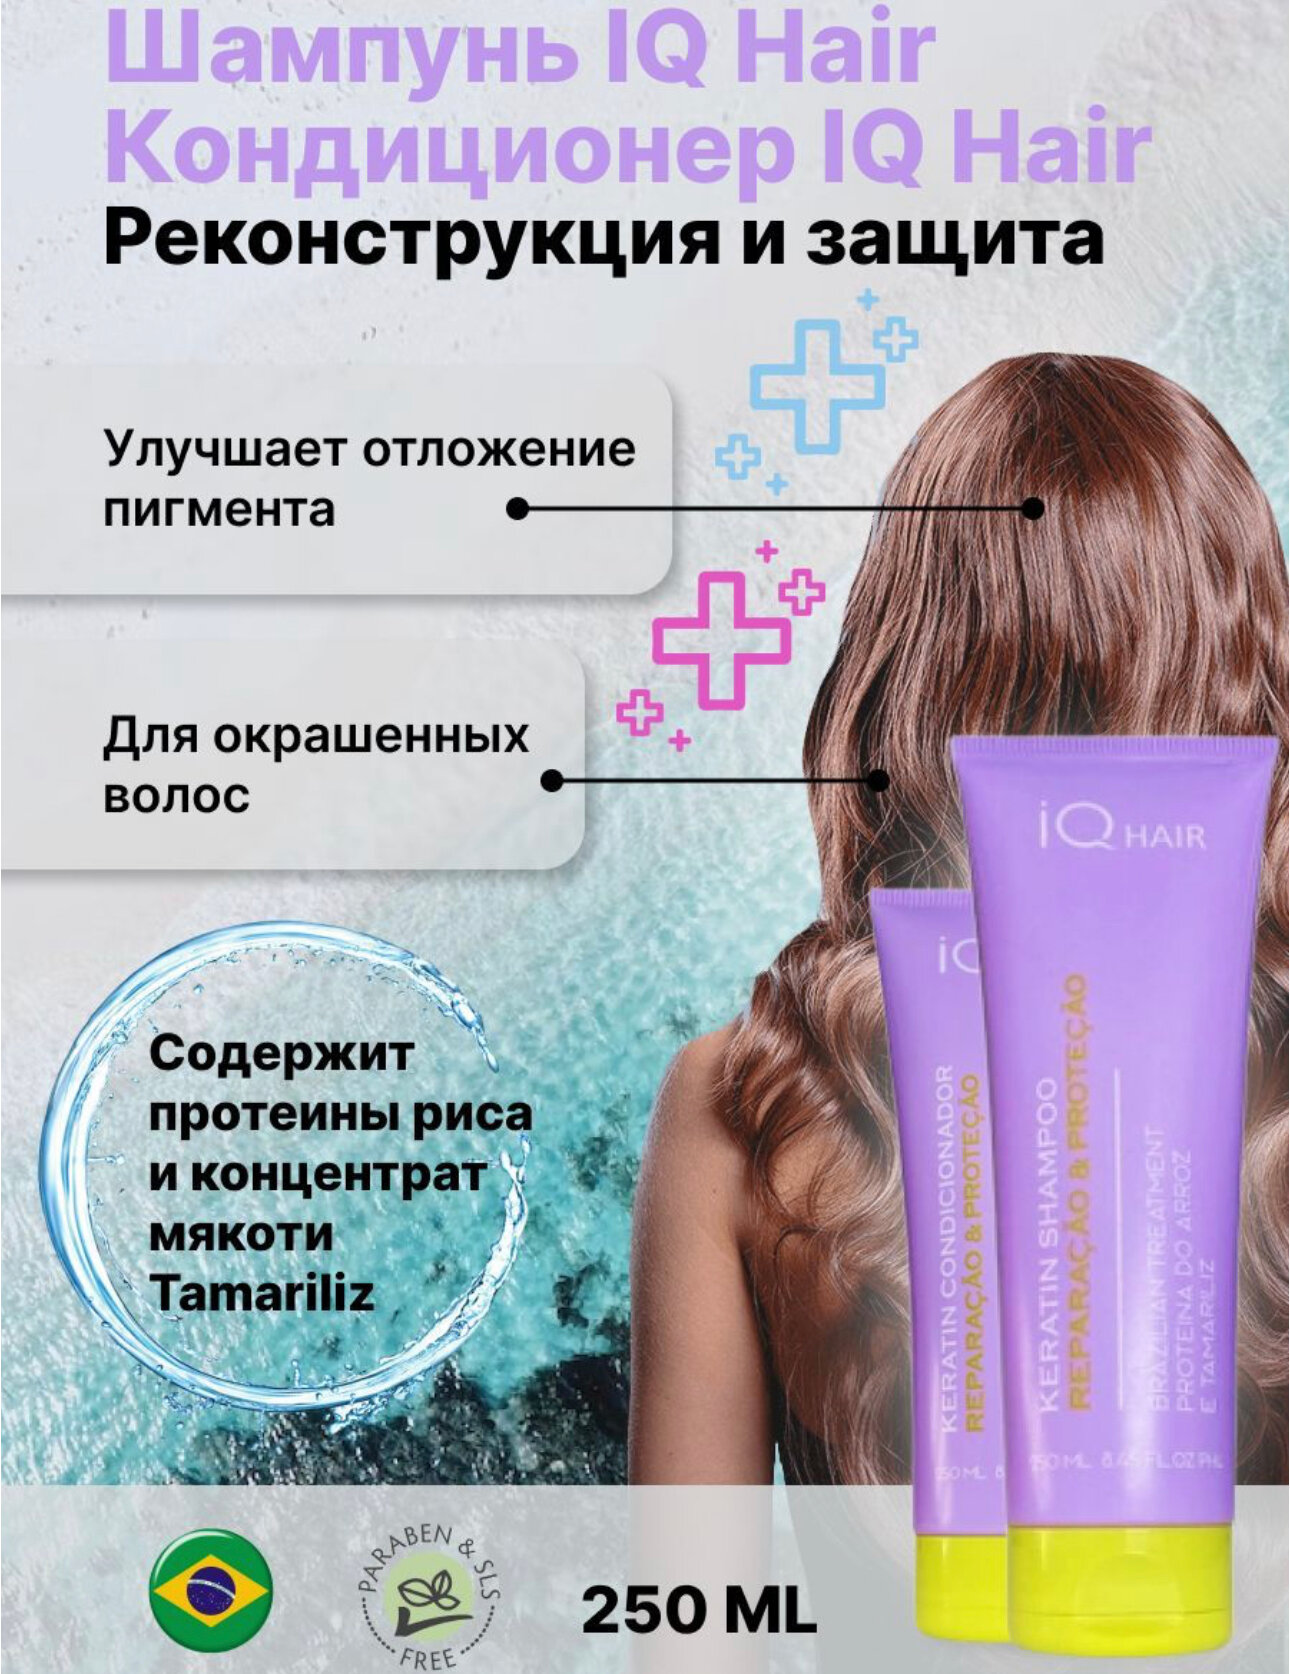 IQ Hair Шампунь + Кондиционер реконструкция и защита 250ml